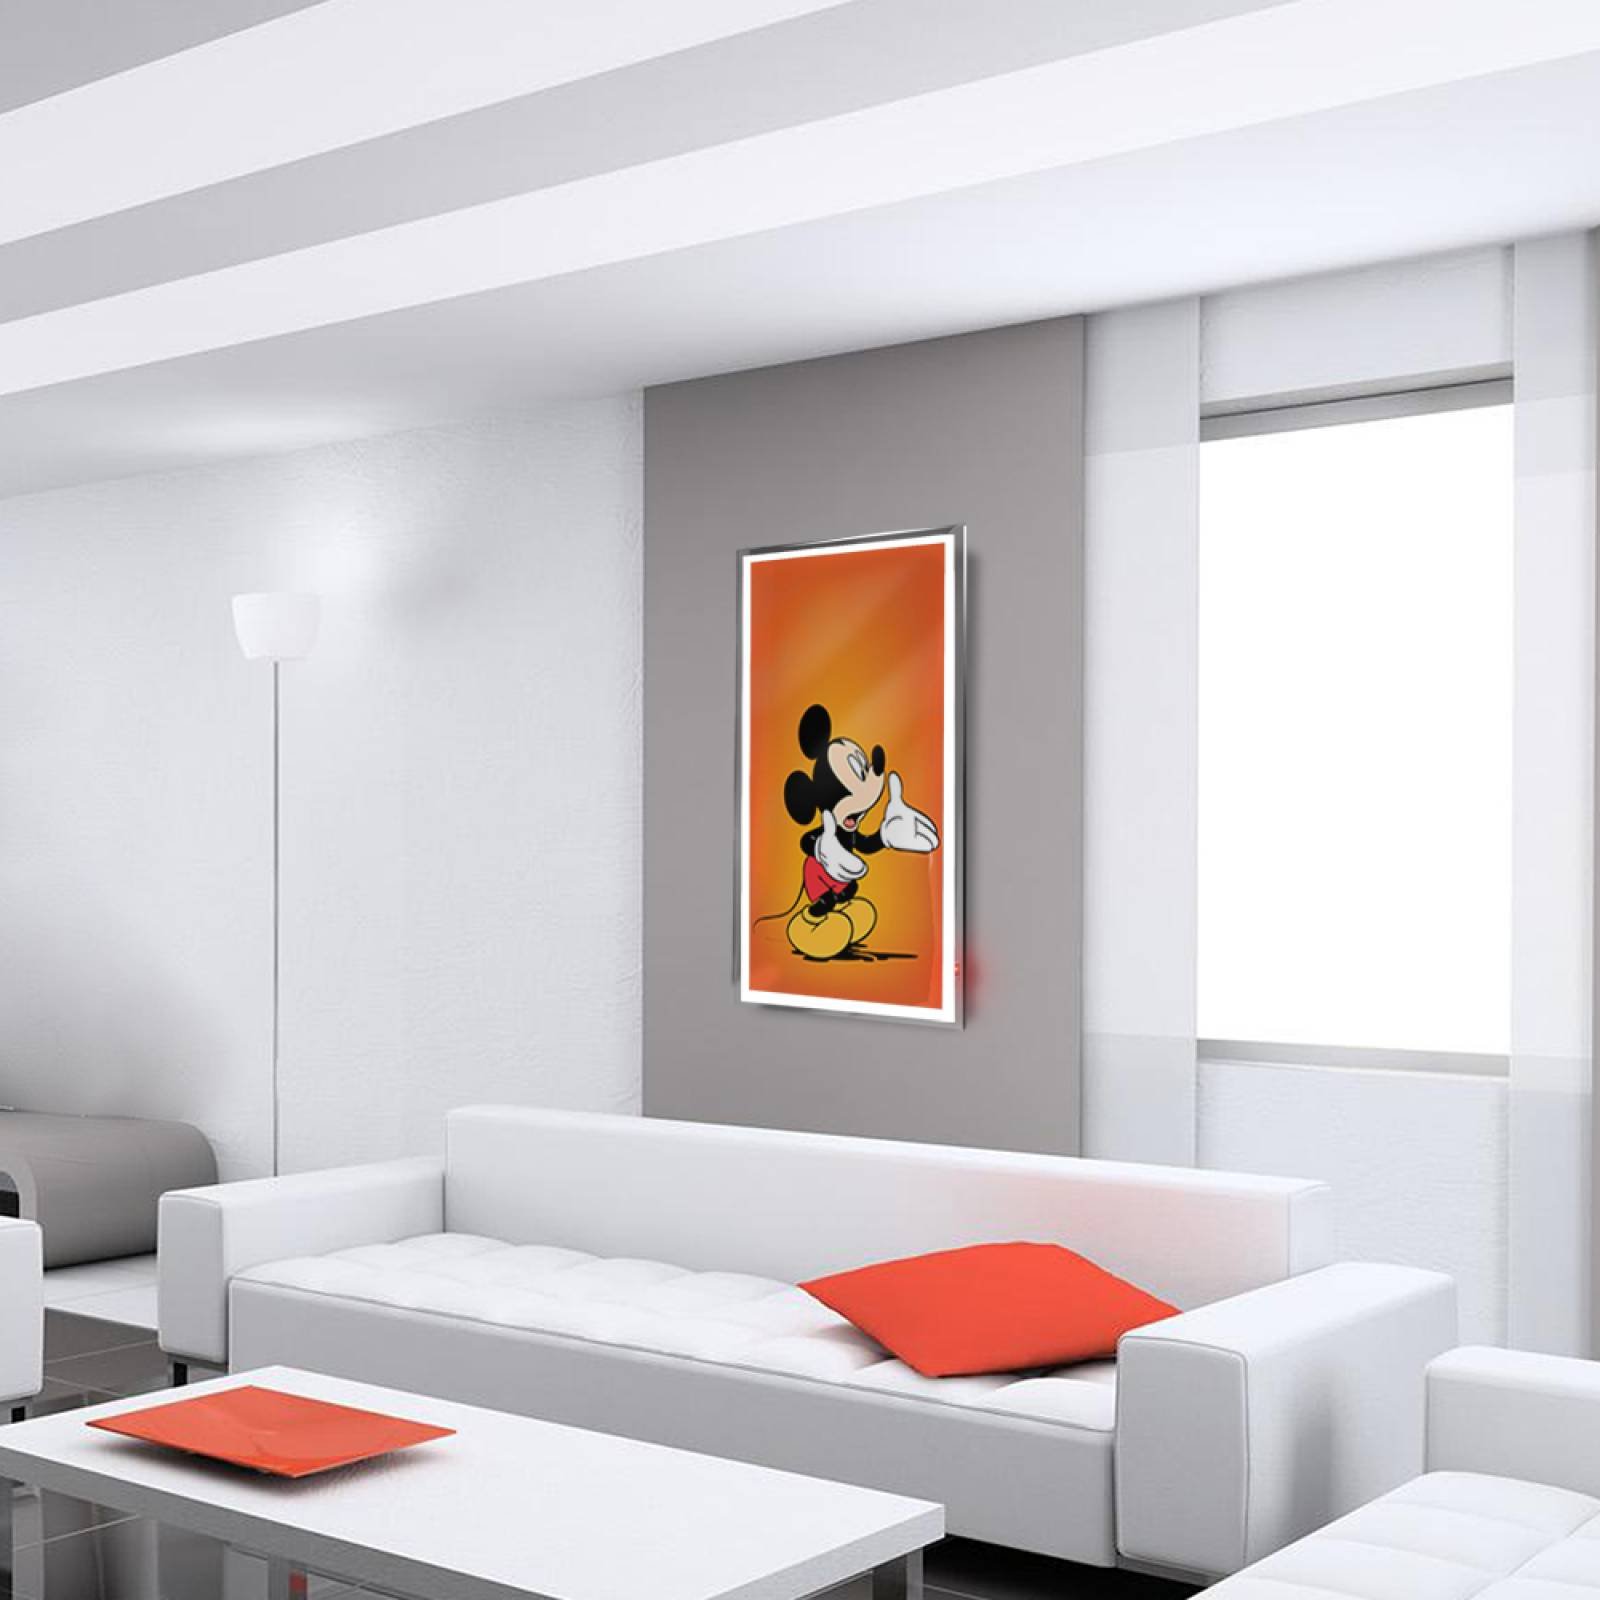 Calefactor de Panel infrarrojo en Cristal para Pared, California Wave Mickey Mouse 2 de 380W 60x90cm, Mod: 137CaSol